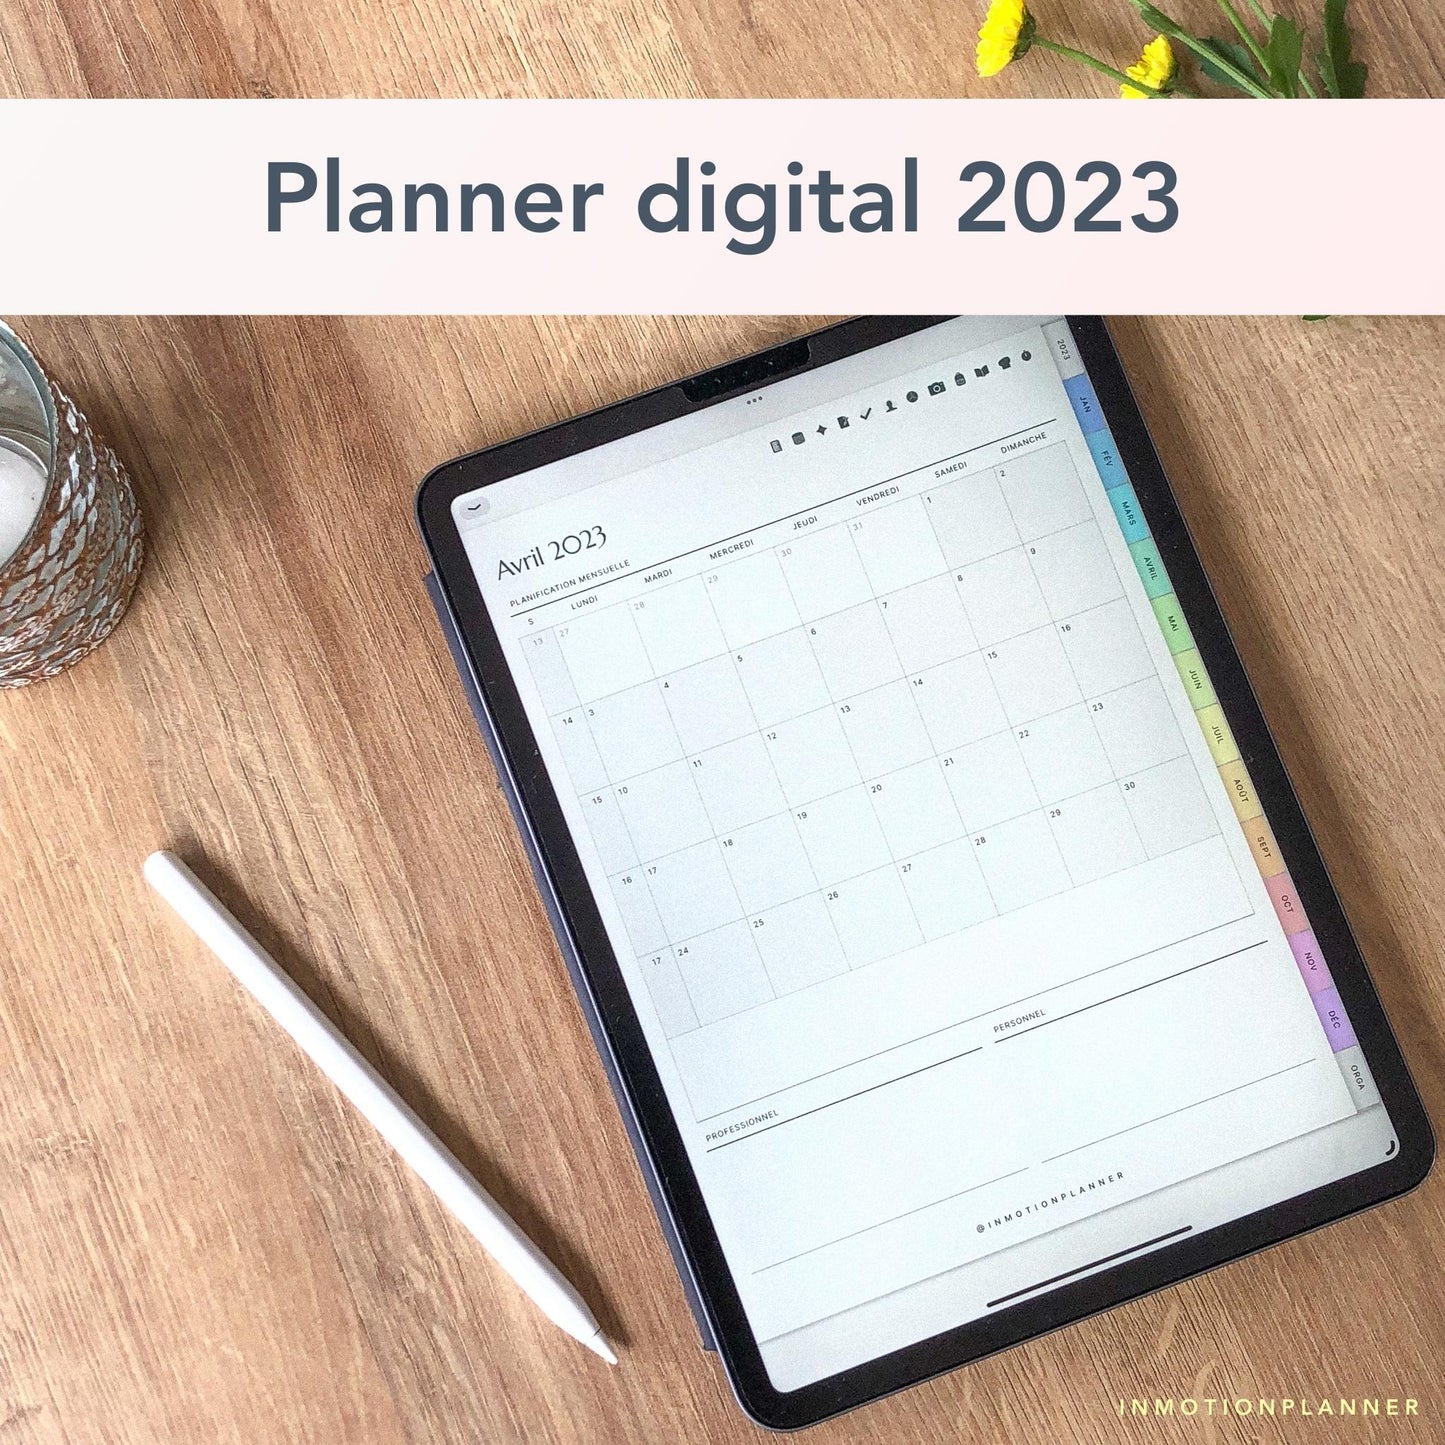 InMotion Planner - Planner digital 2023 pour iPad